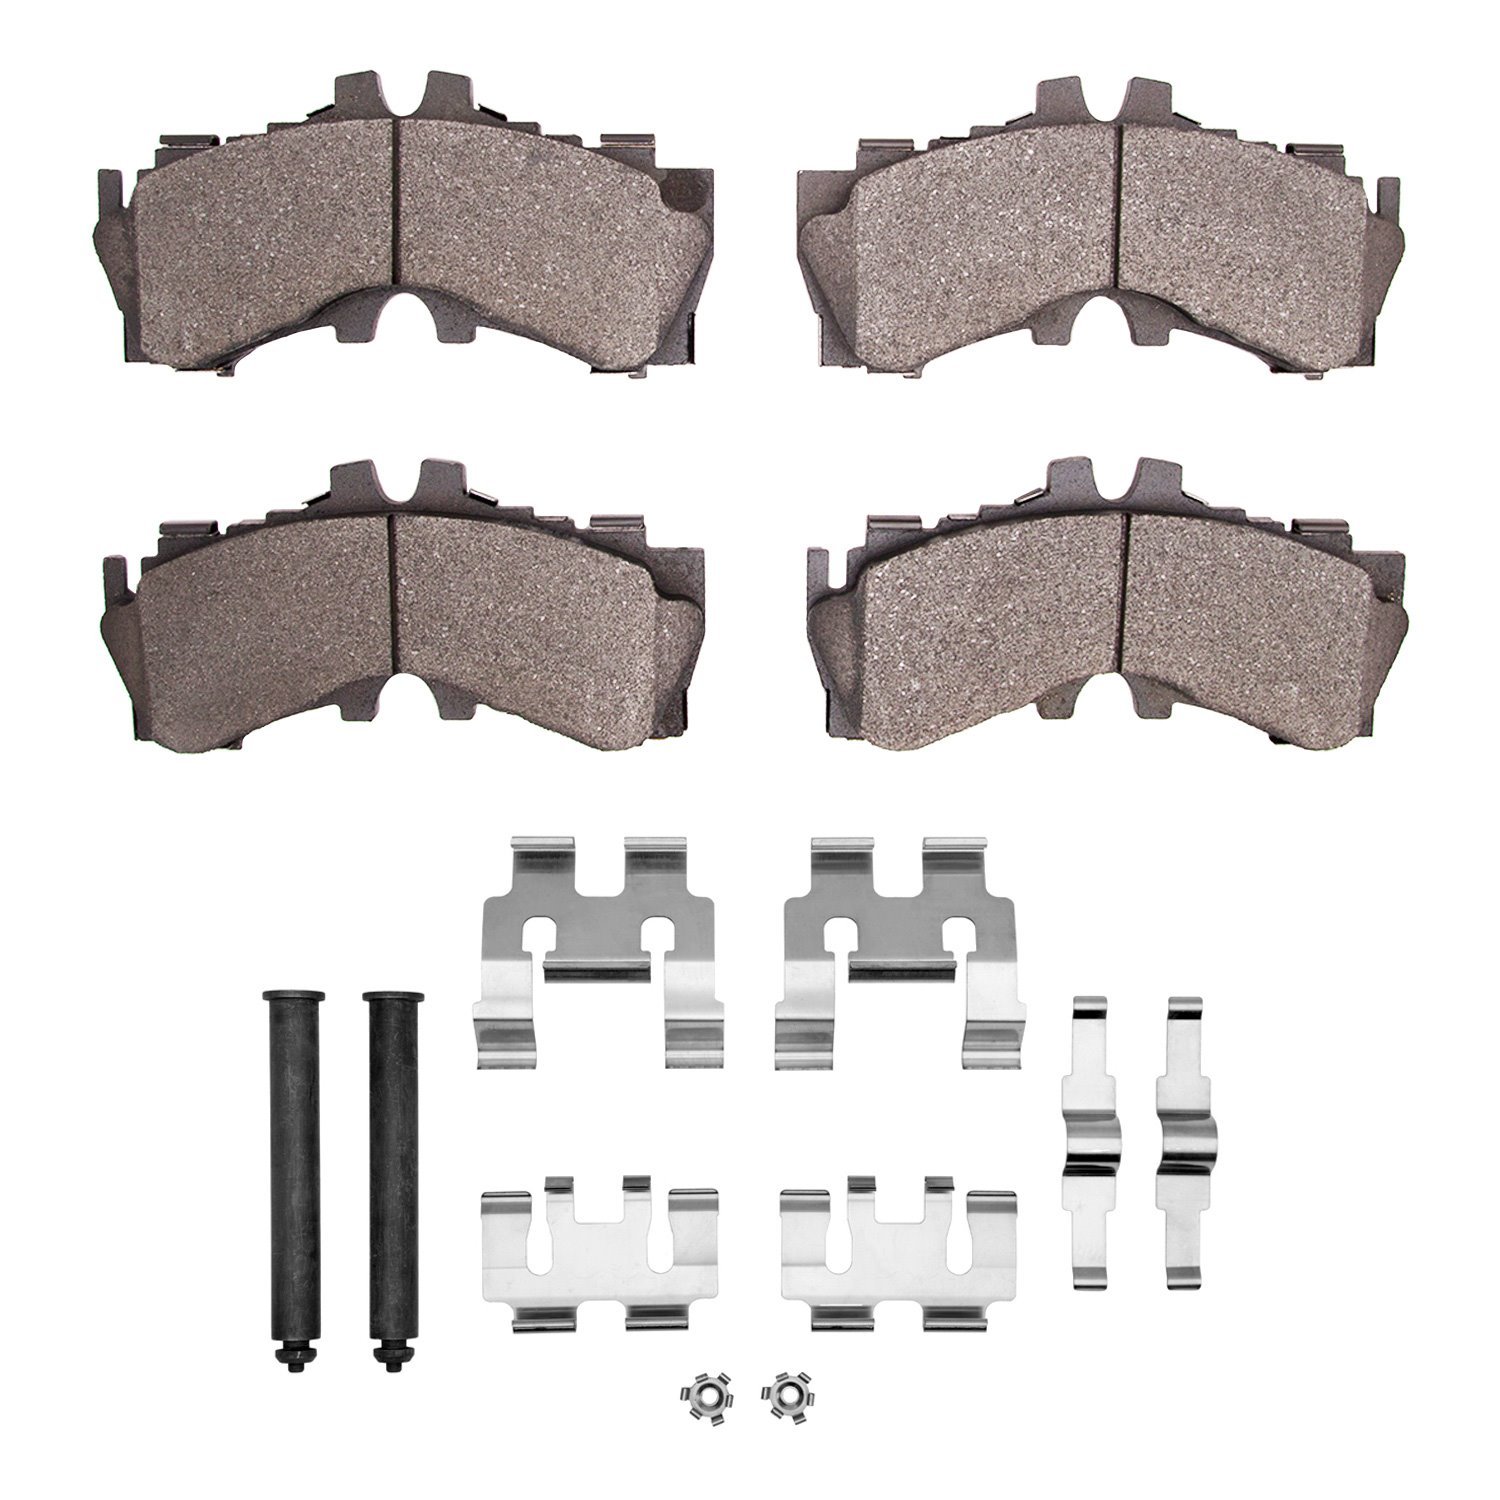 1310-2062-01 3000-Series Ceramic Brake Pads & Hardware Kit, Fits Select Lexus/Toyota/Scion, Position: Front